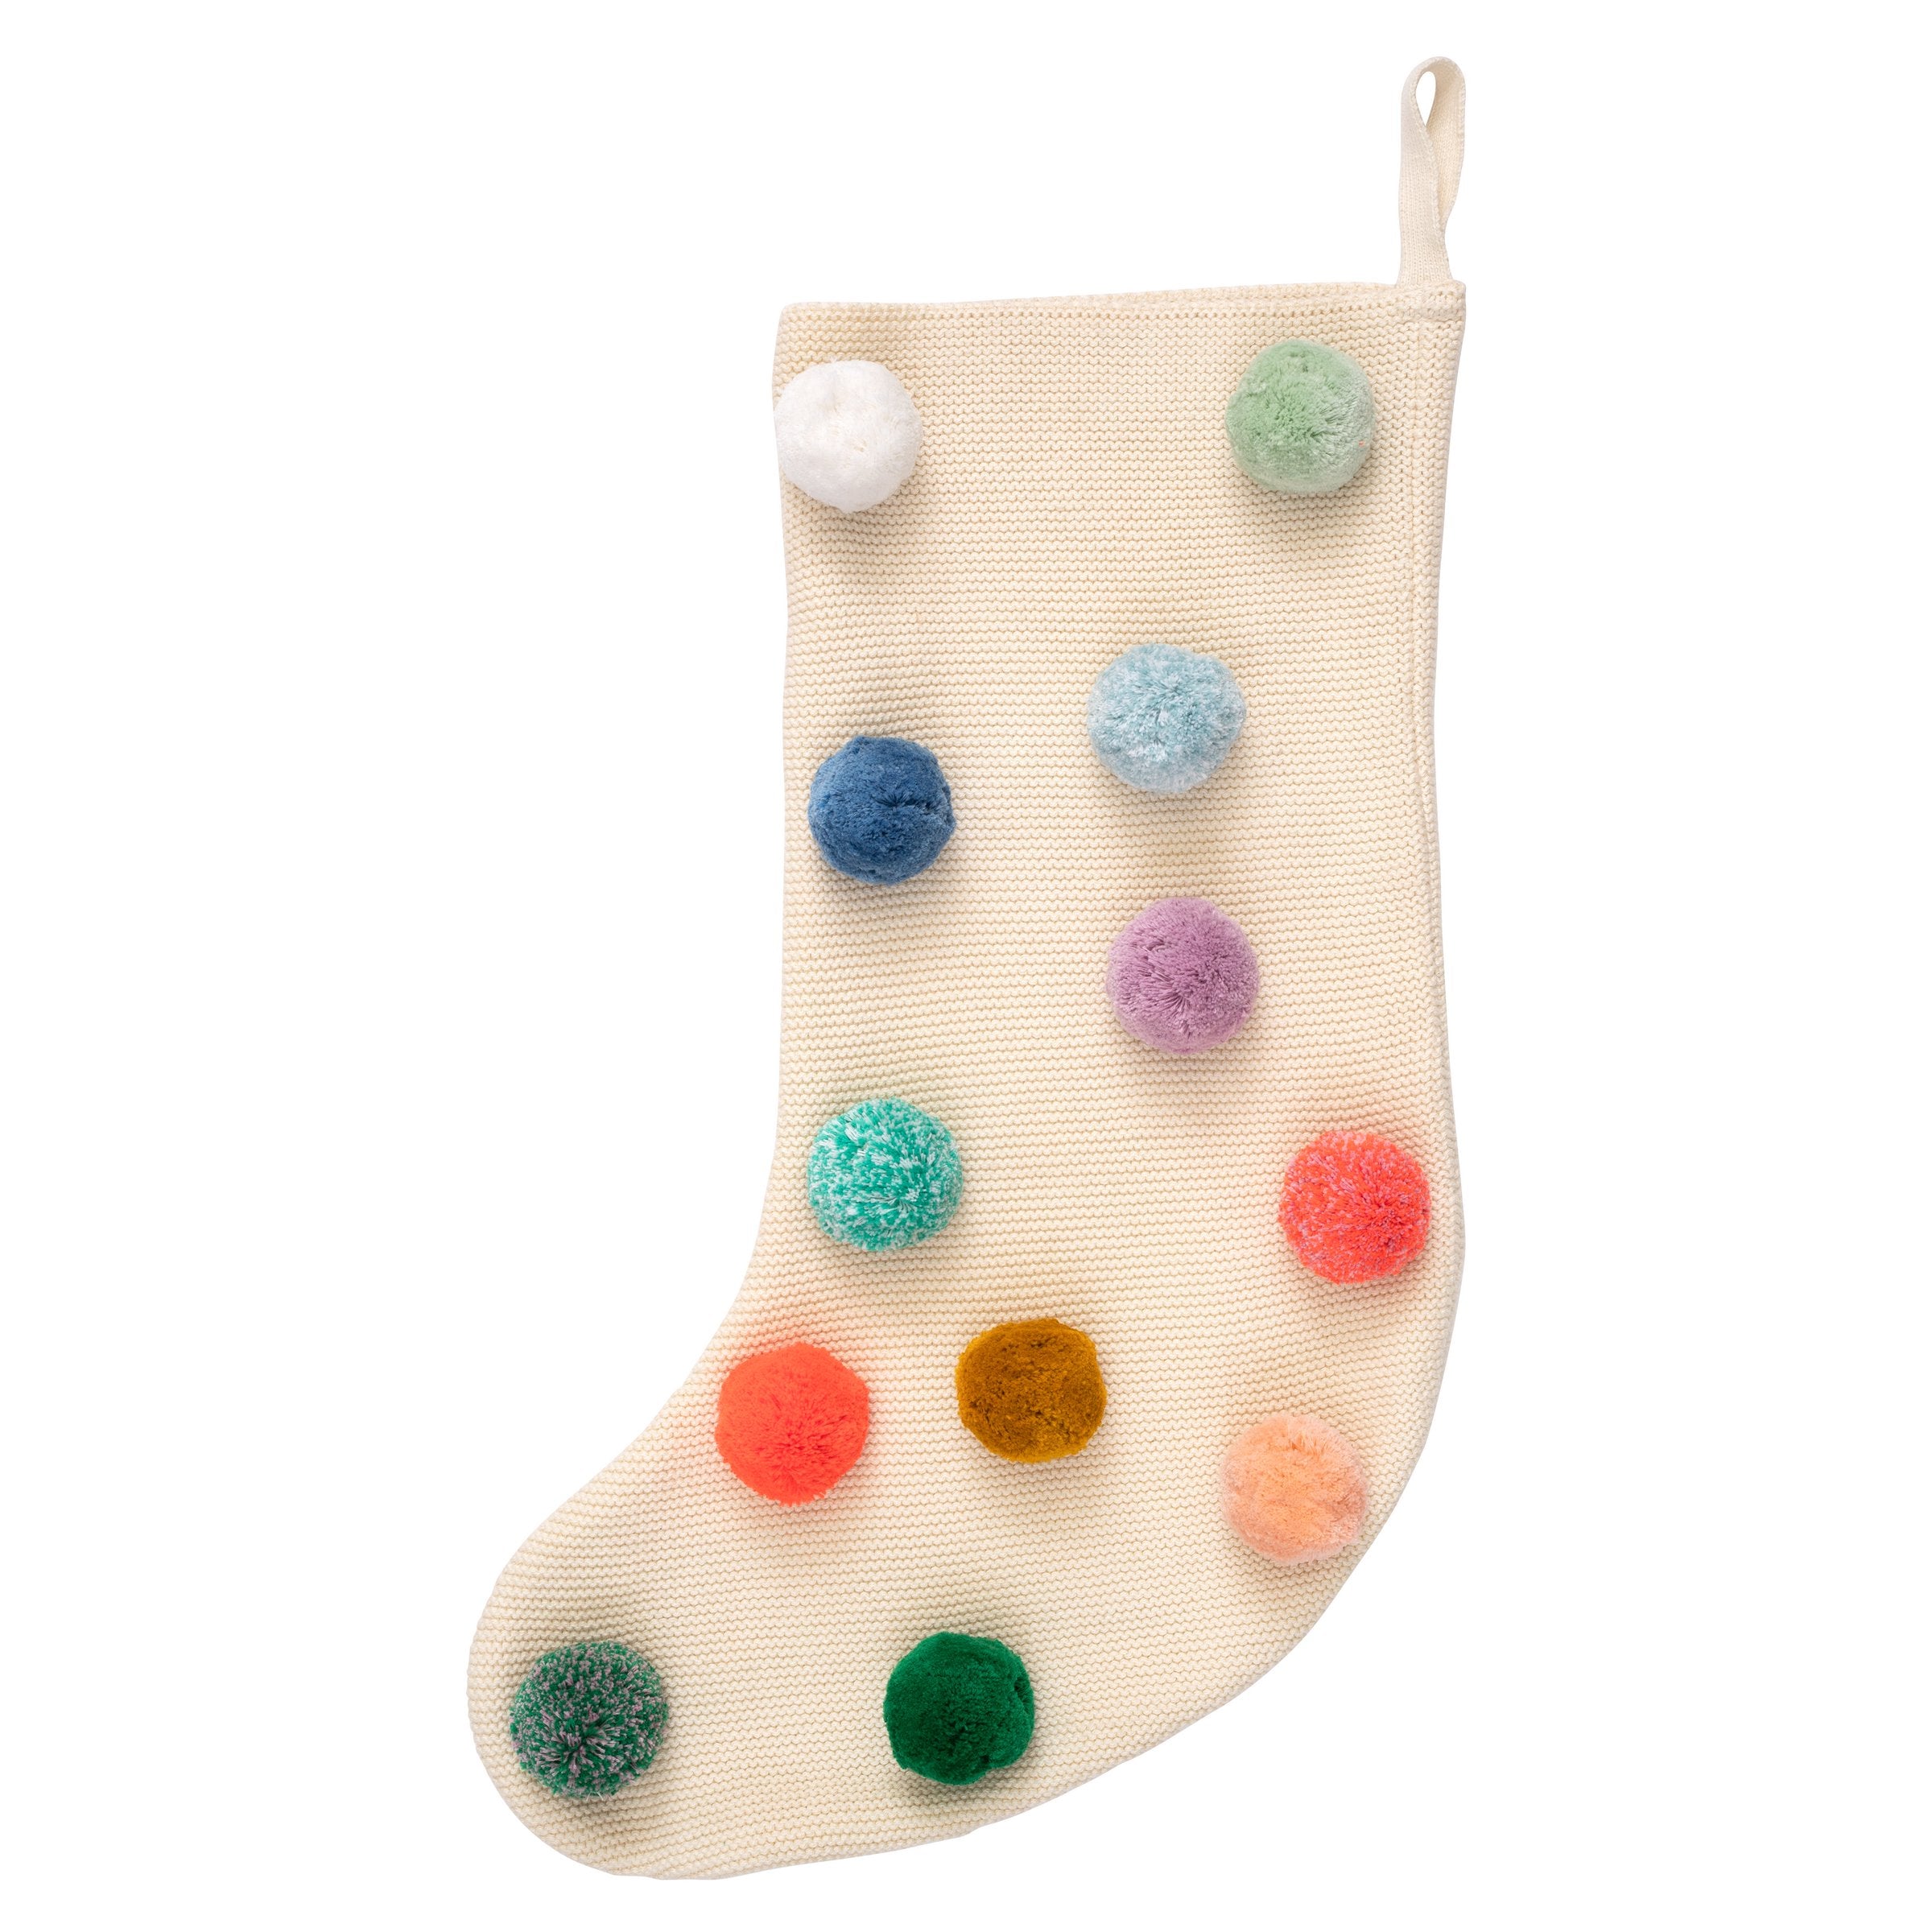 Colourful pompoms make this a fabulous fun kids' Christmas stocking.